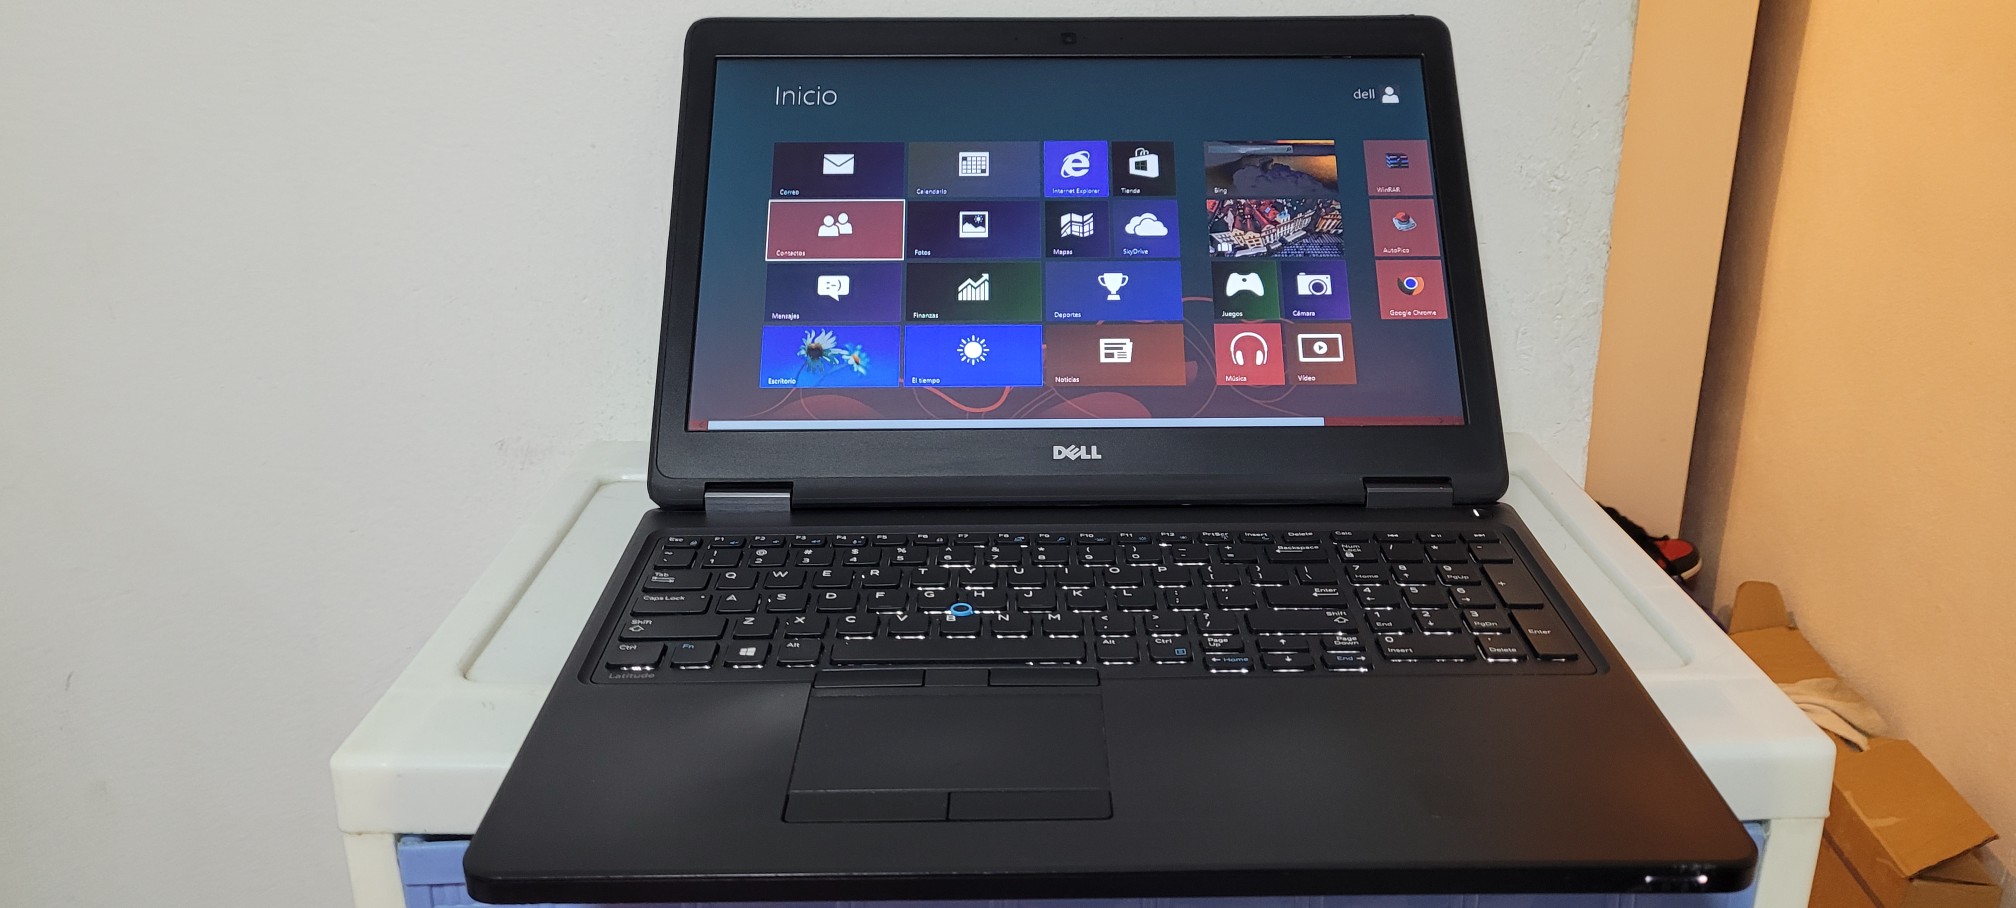 computadoras y laptops - Laptop Dell 17 Pulg Core i7 2.7ghz Ram 8gb Disco 1000gb hdmi 0